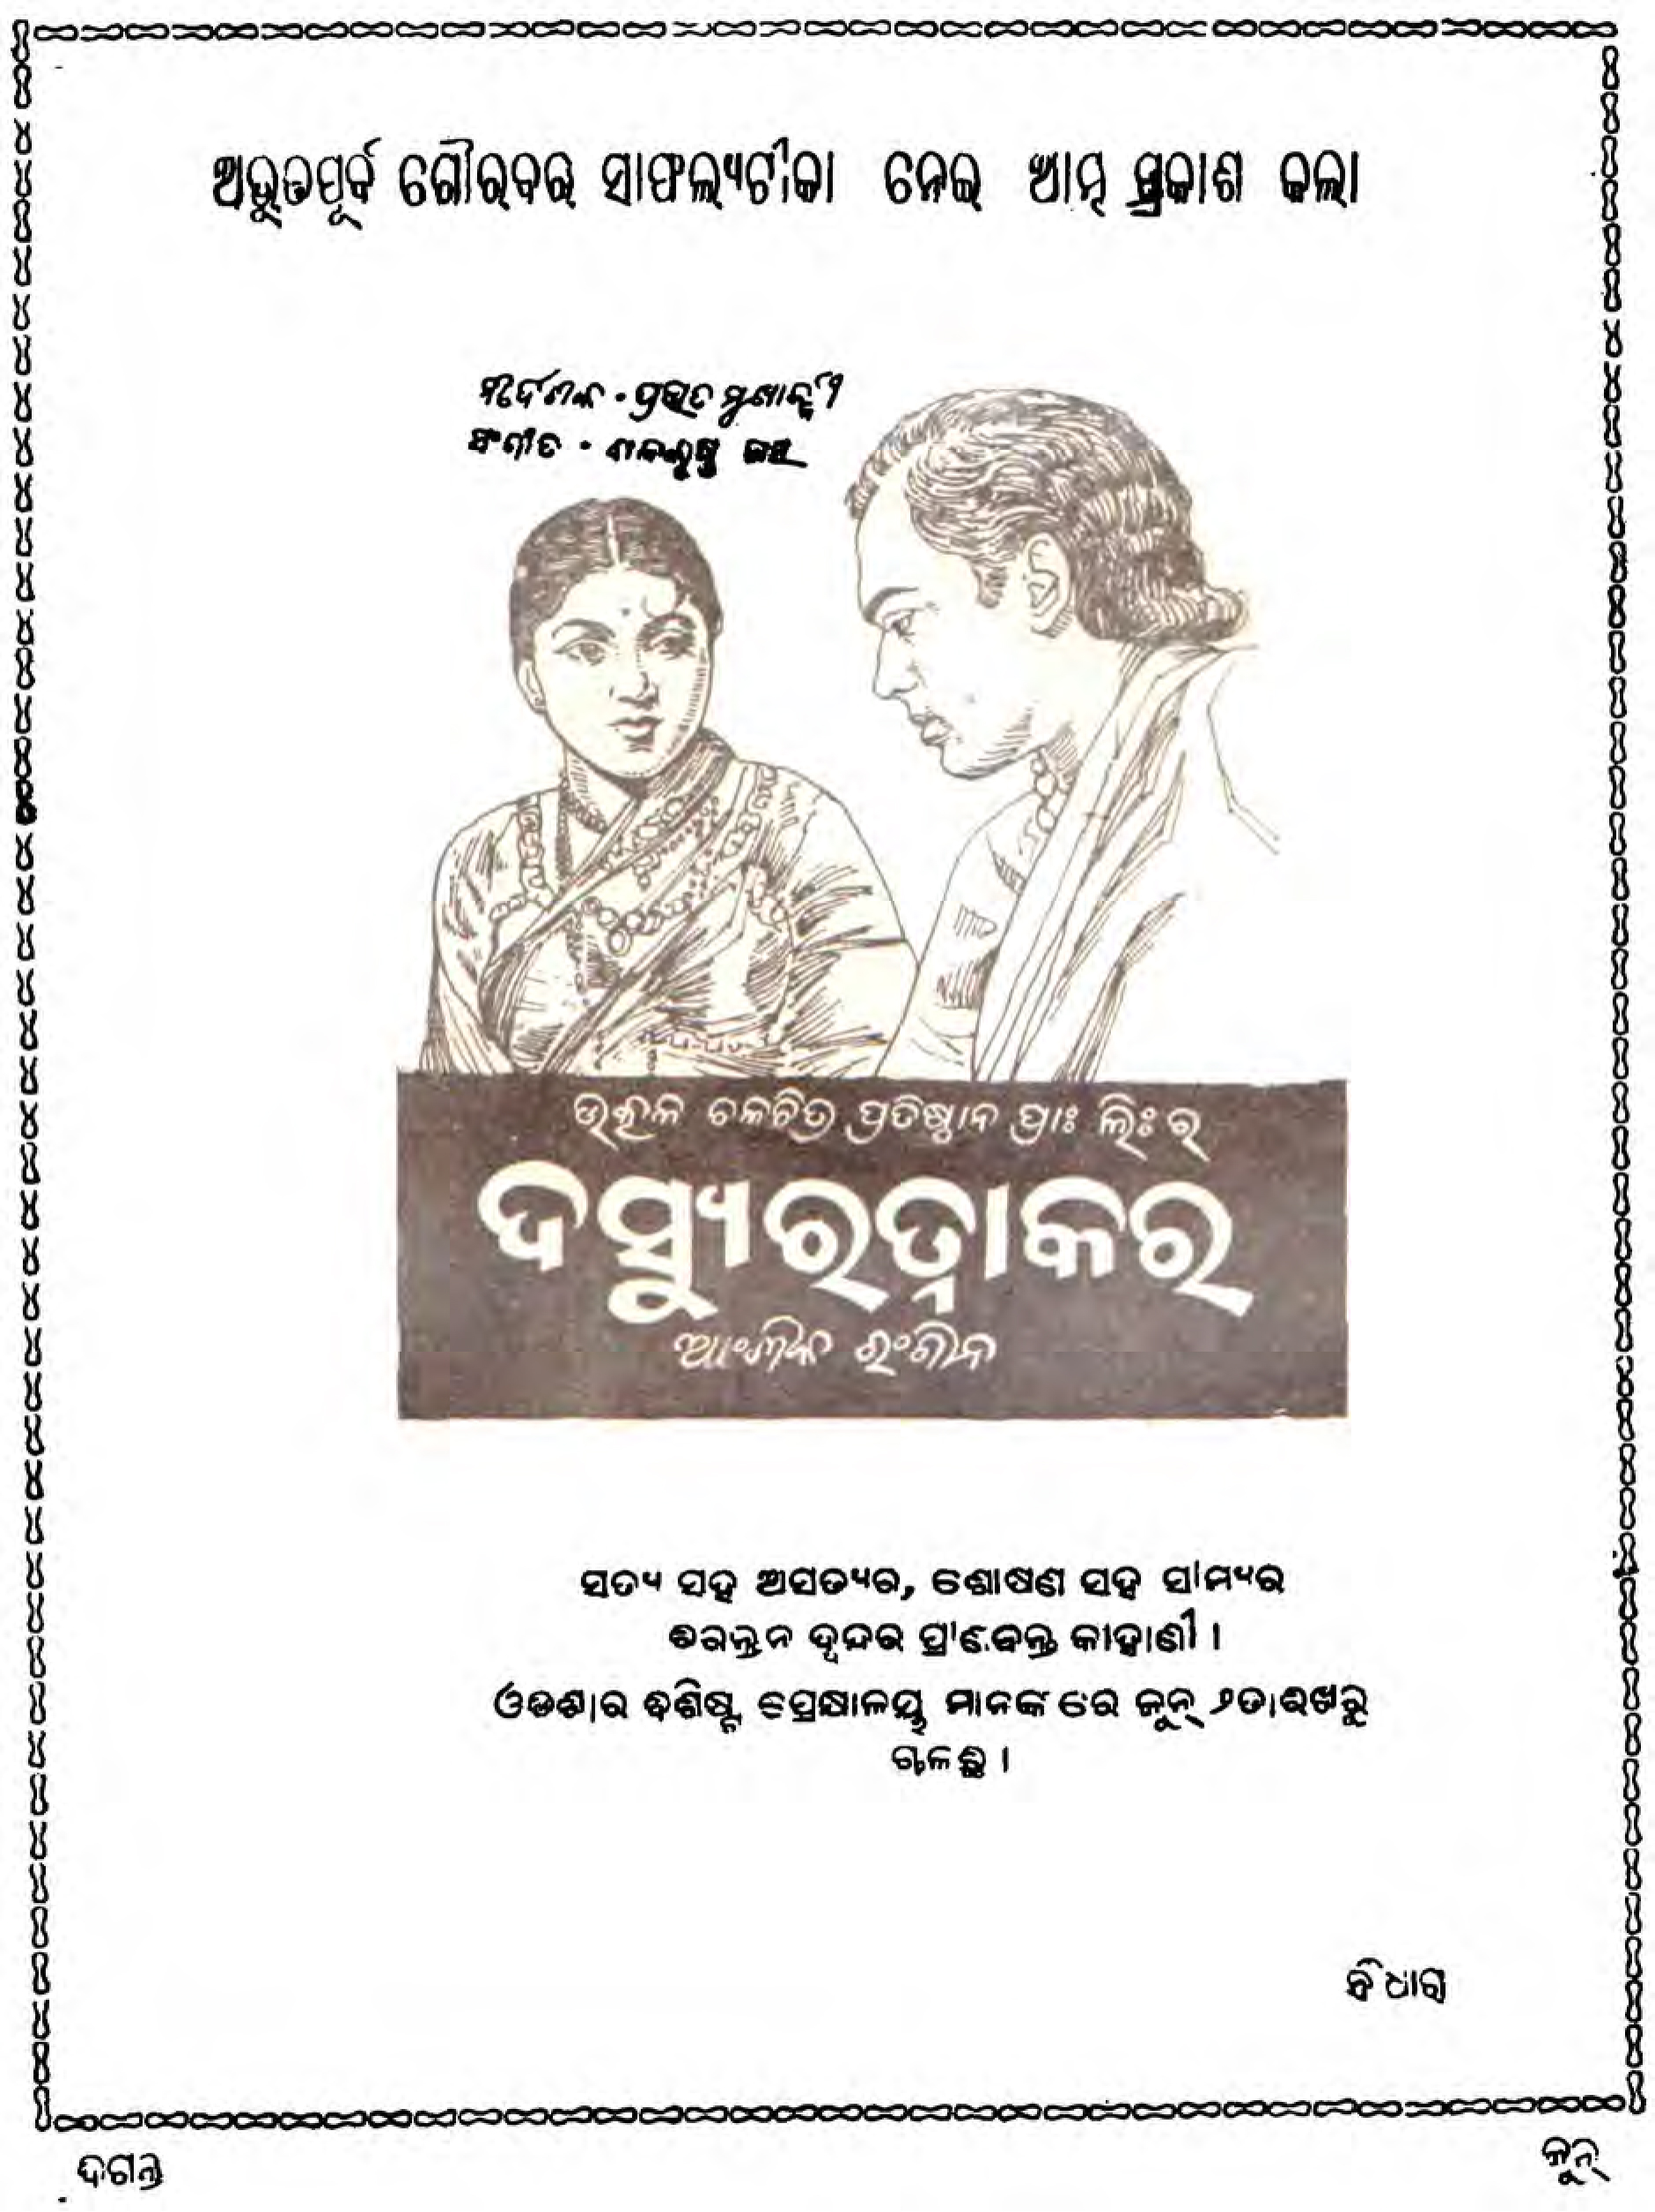 'Dasyu Ratnakar' ad published in Digant magazine